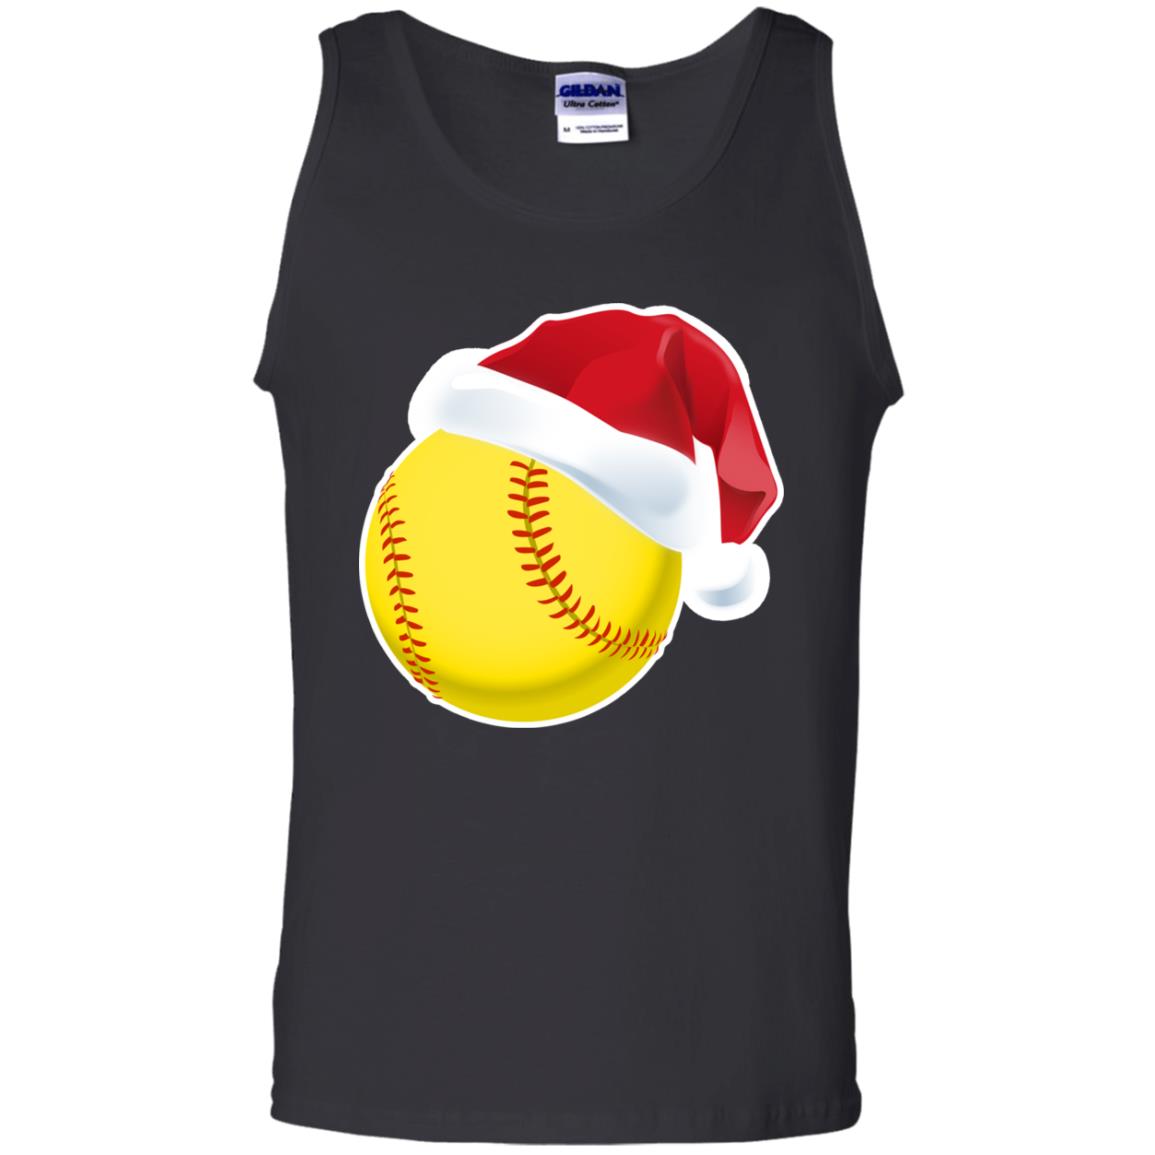 Softball With Santa Claus Hat X-mas Shirt For Softball LoversG220 Gildan 100% Cotton Tank Top